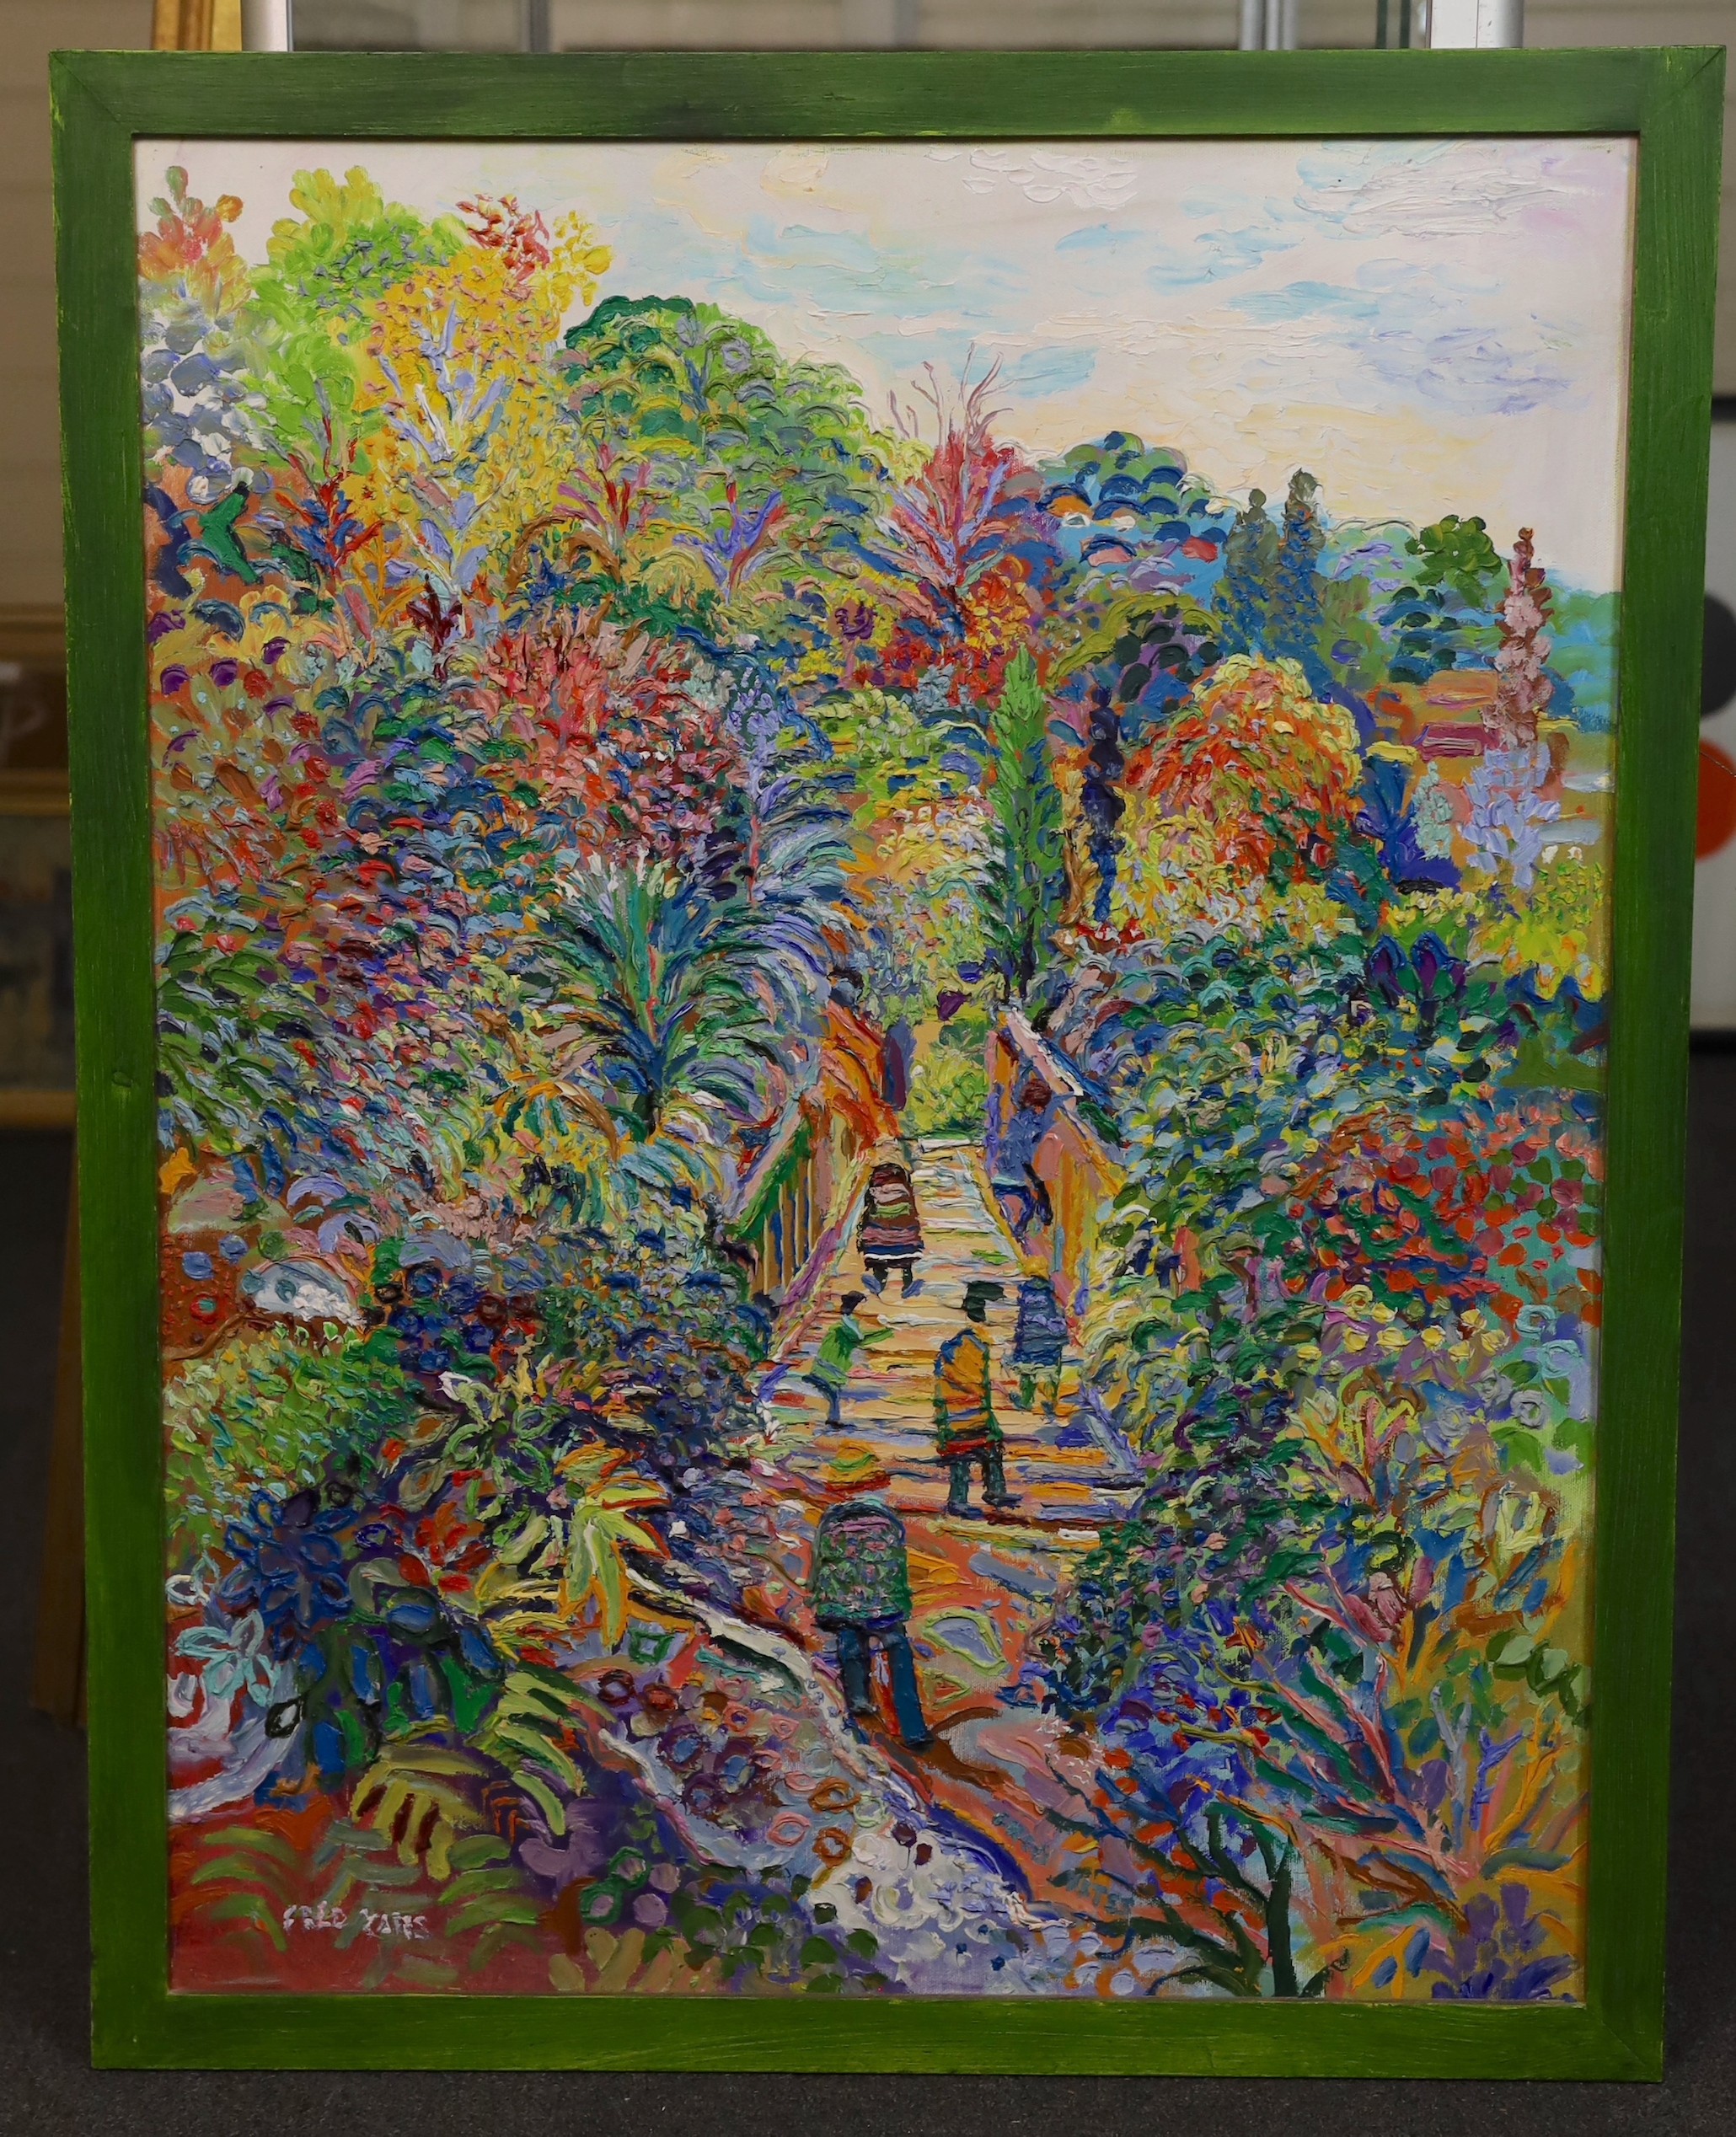 Fred Yates (British, 1922-2008), Figures on a woodland path, oil on canvas, 89 x 69cm